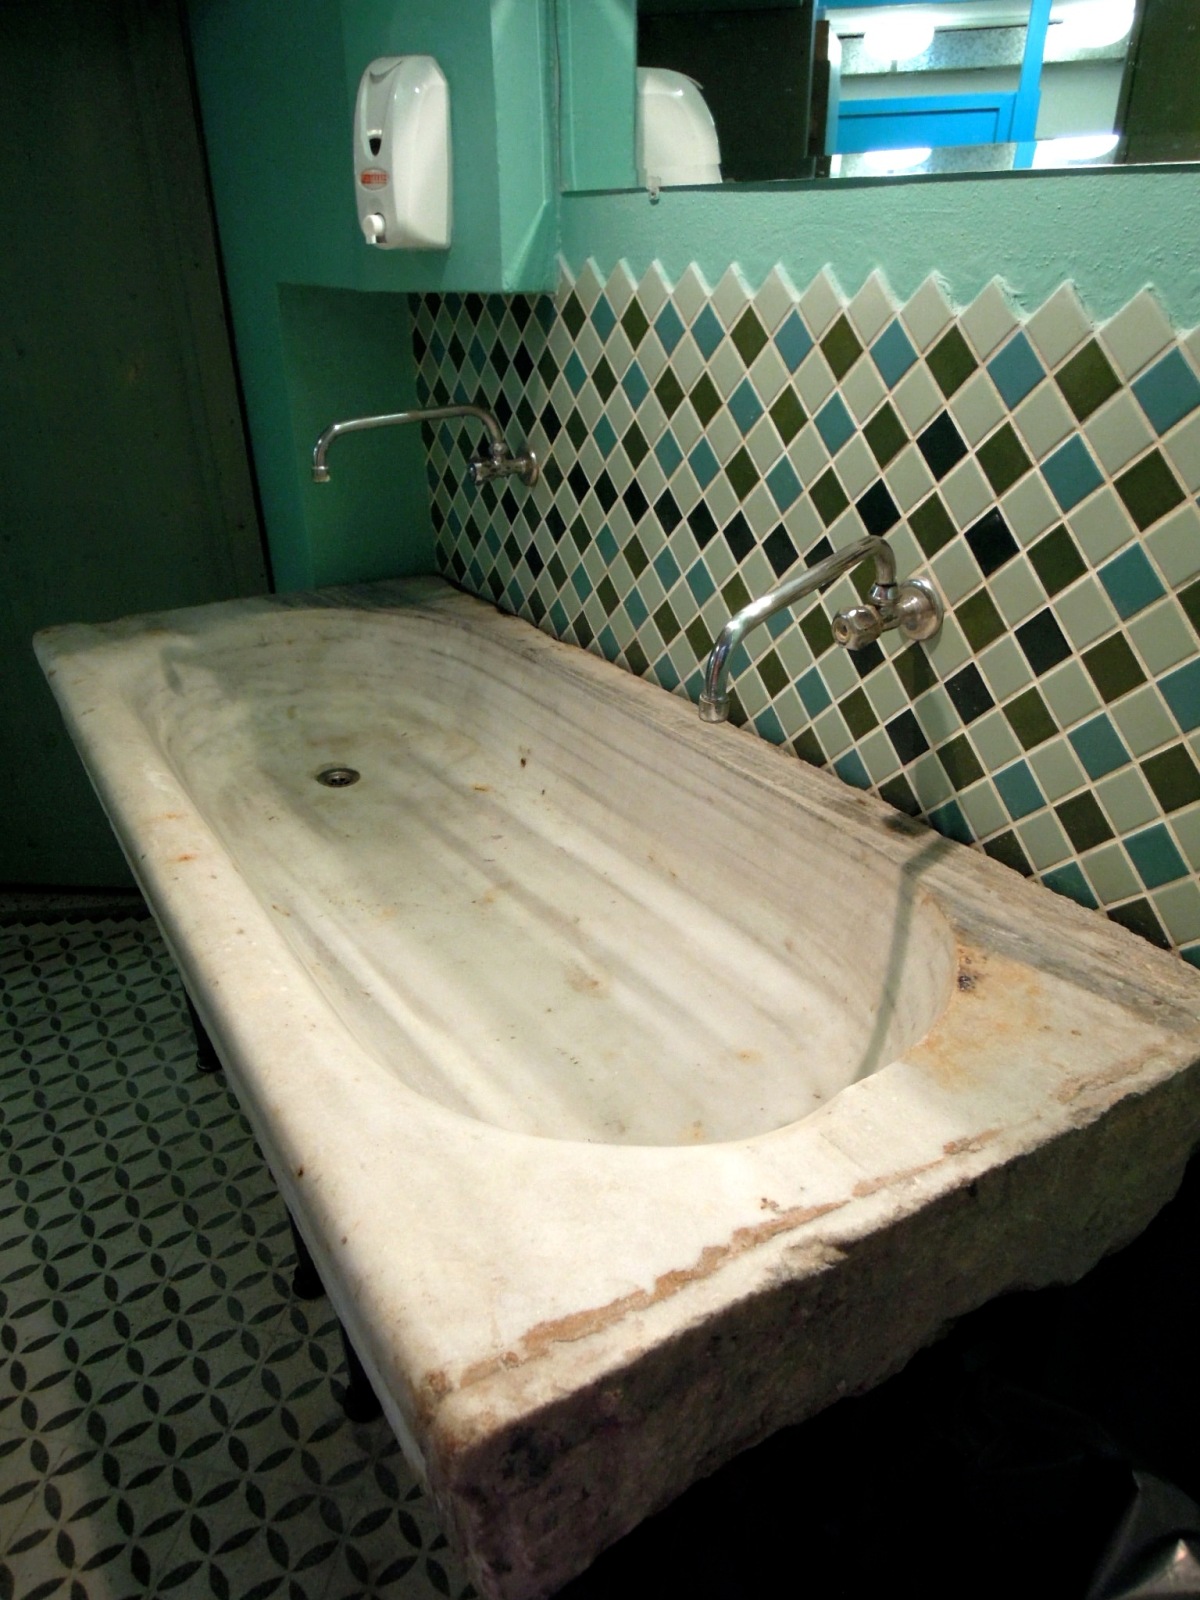 Big marble sink at Zencefil café